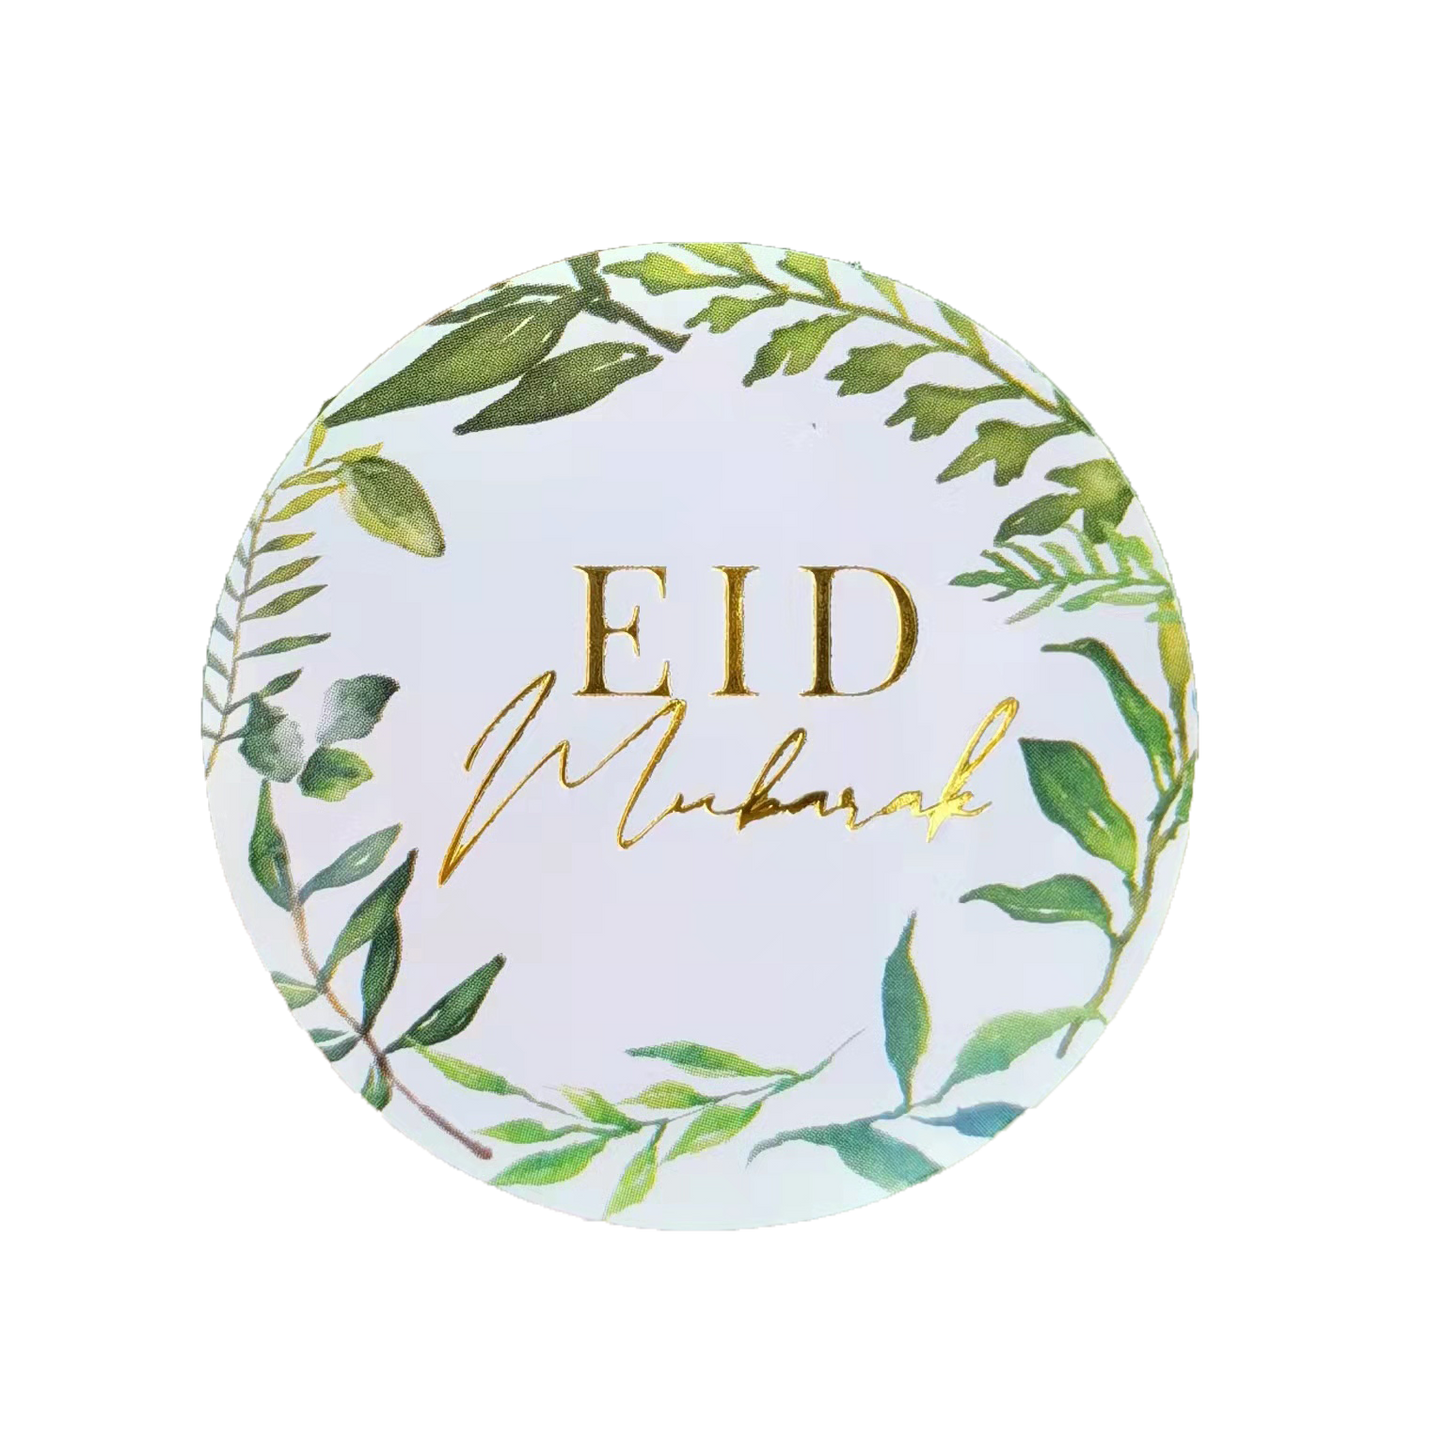 Eid Mubarak Stickers Foil Stamped Green Leaf - 10 Pack